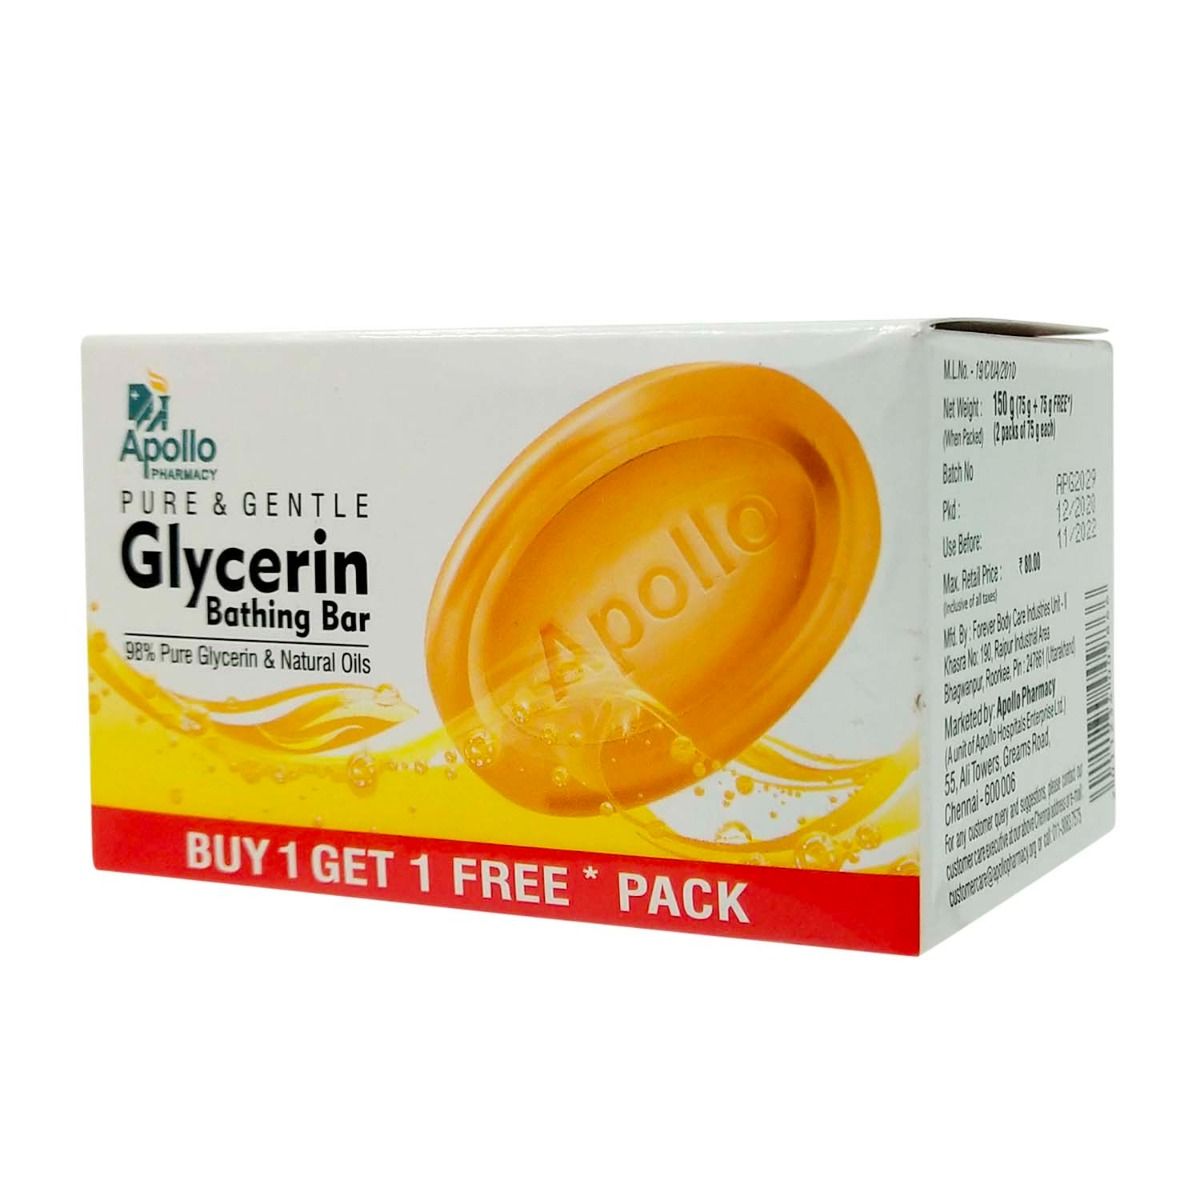 Apollo Pharmacy Glycerin Bathing Bar, 75 gm (Buy 1 Get 1 Free), Pack of 1 